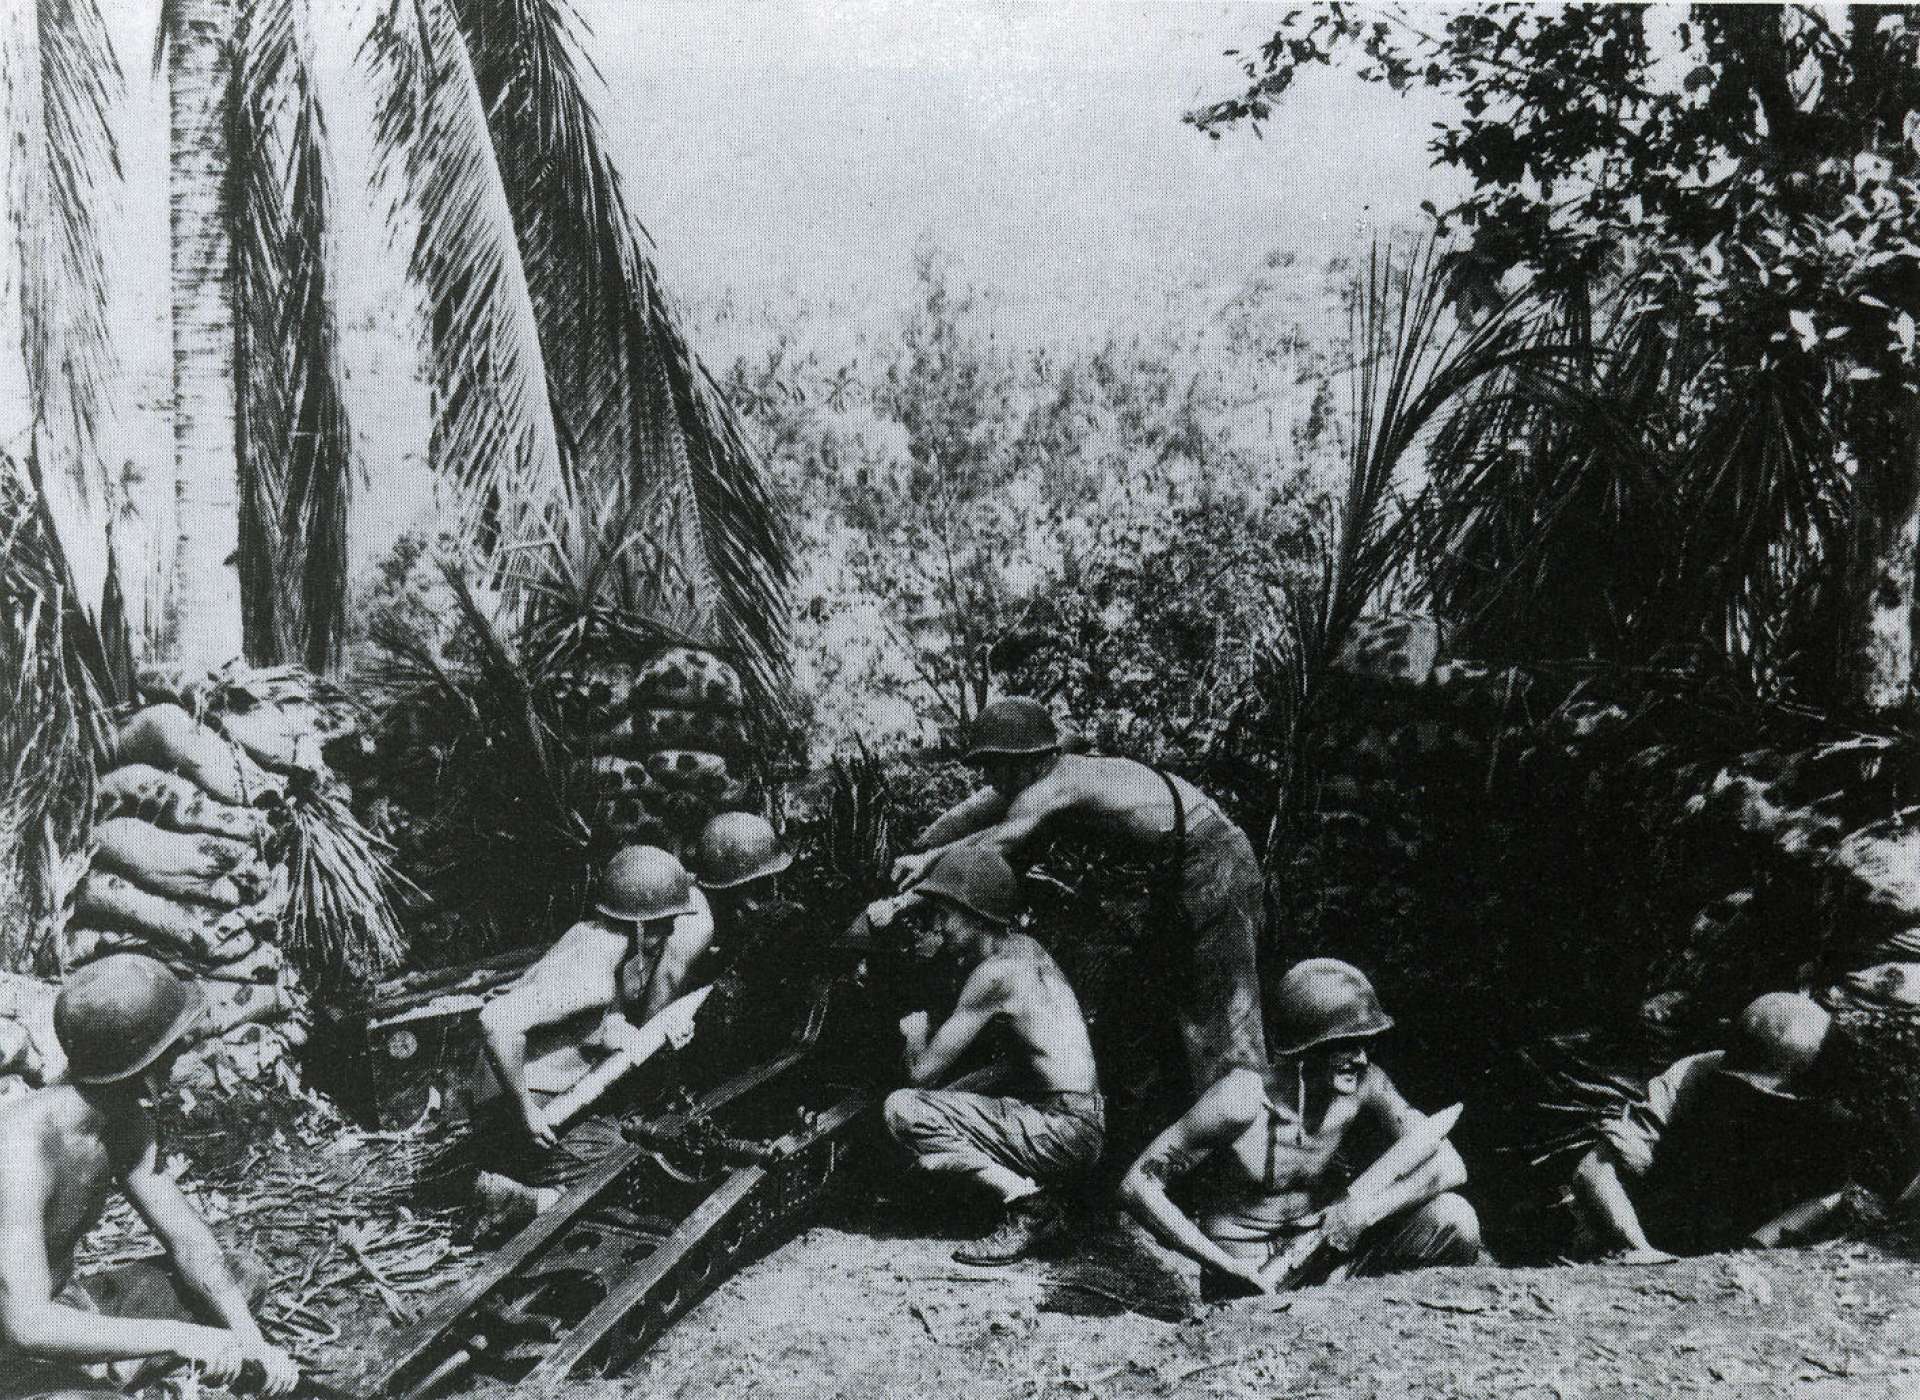 Marines on Guadalcanal